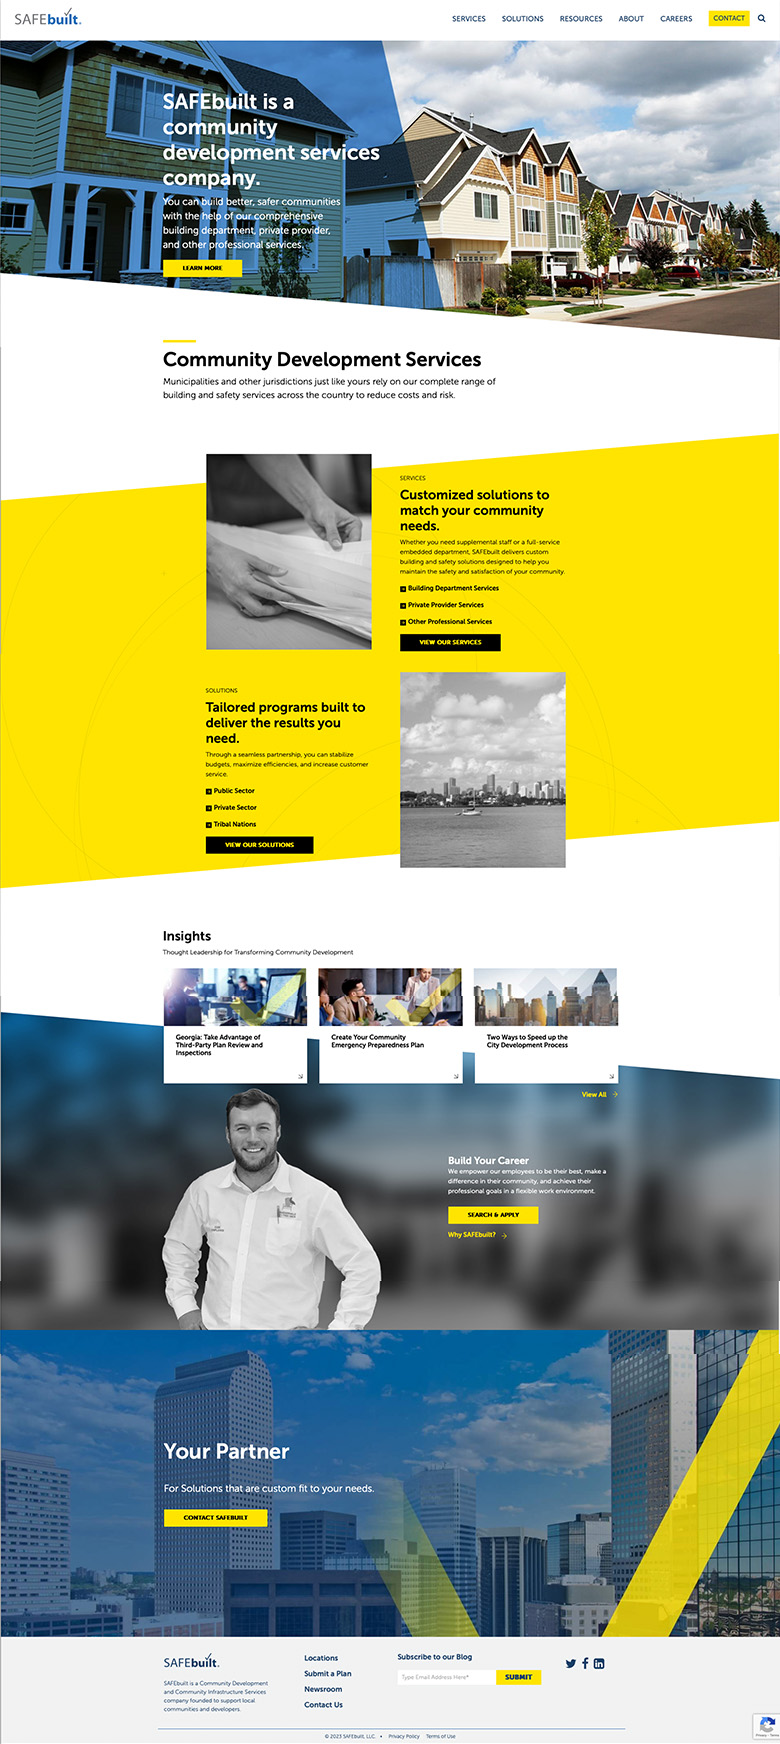 SAFEbuilt homepage designed by Vye Agency